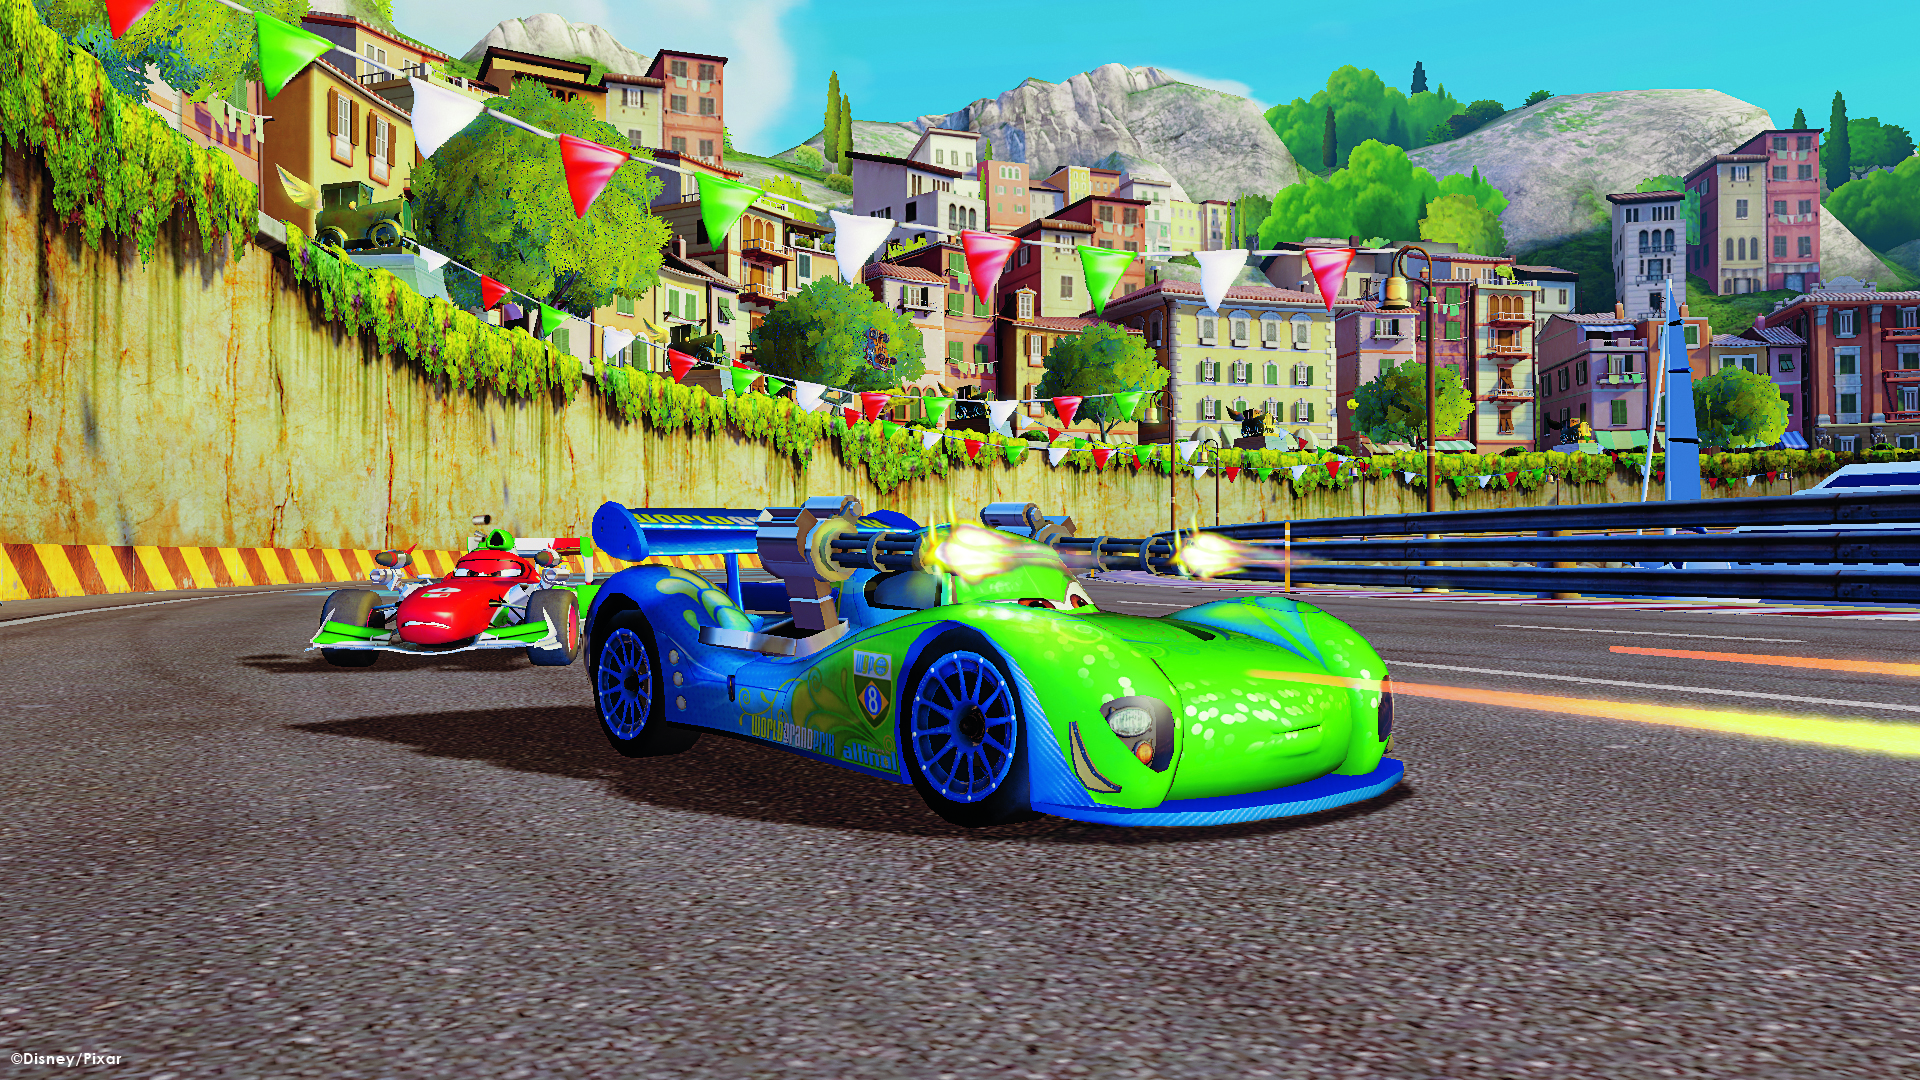 DisneyPixar Cars 2 The Video Game Images 